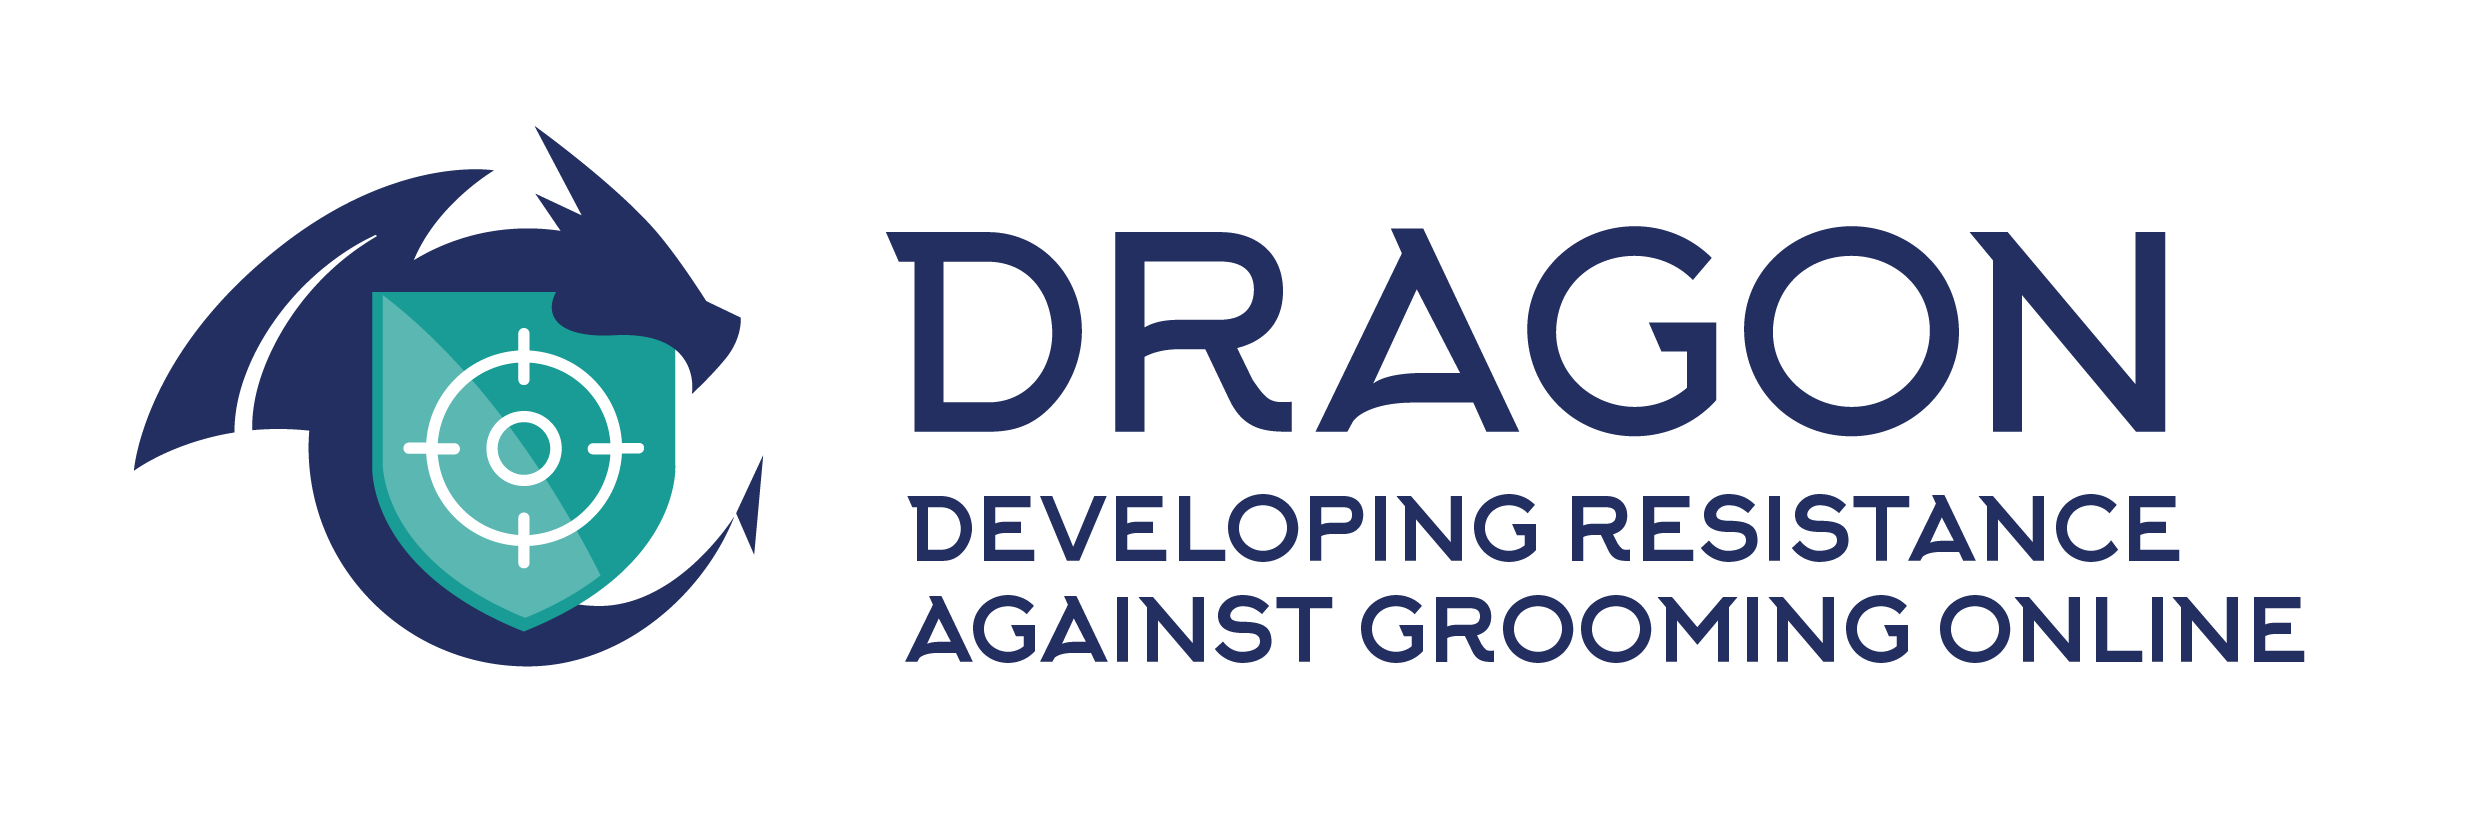 Project DRAGONS logo 